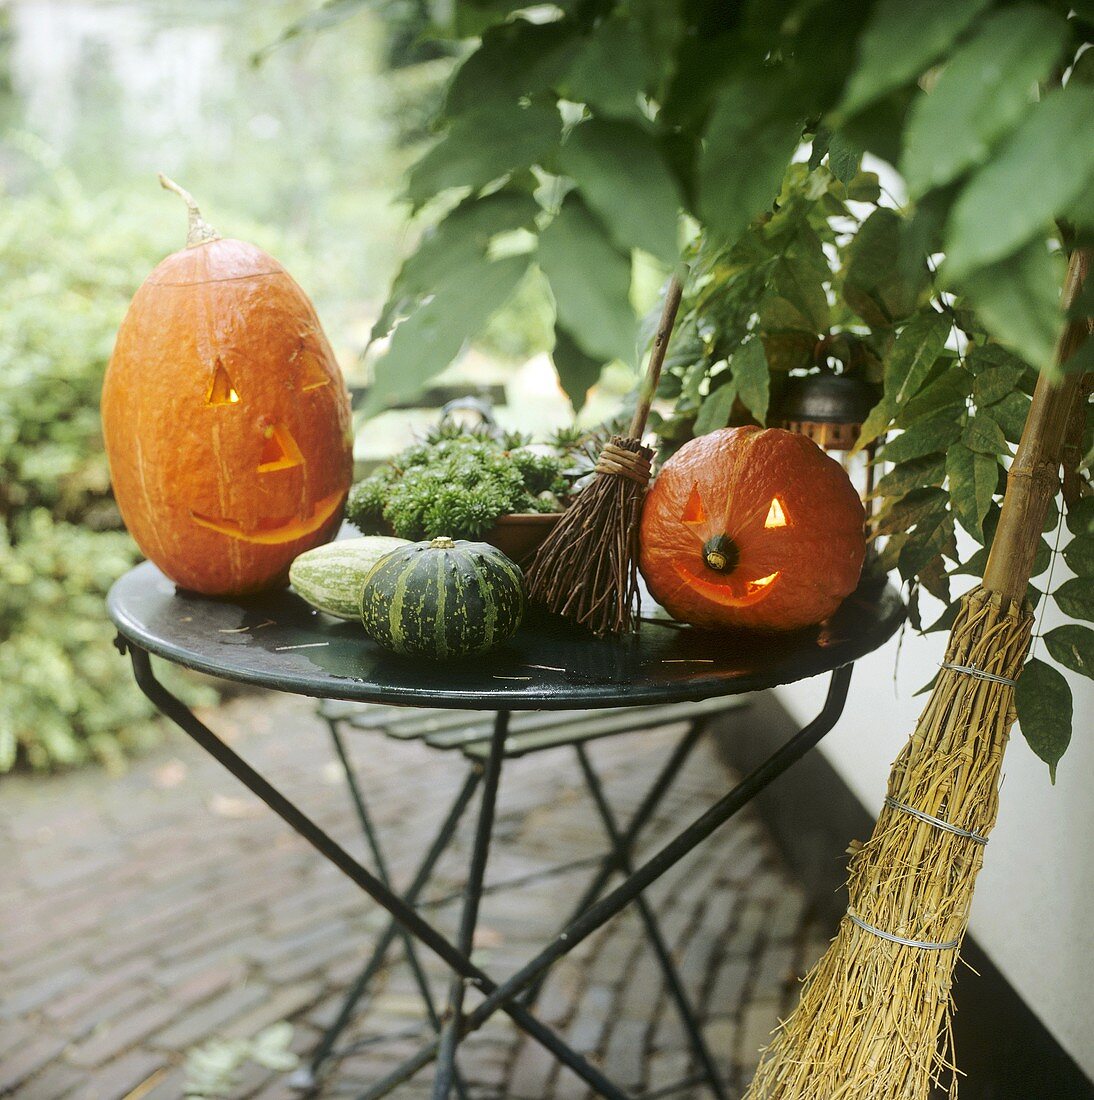 Carved pumpkins and besom broom